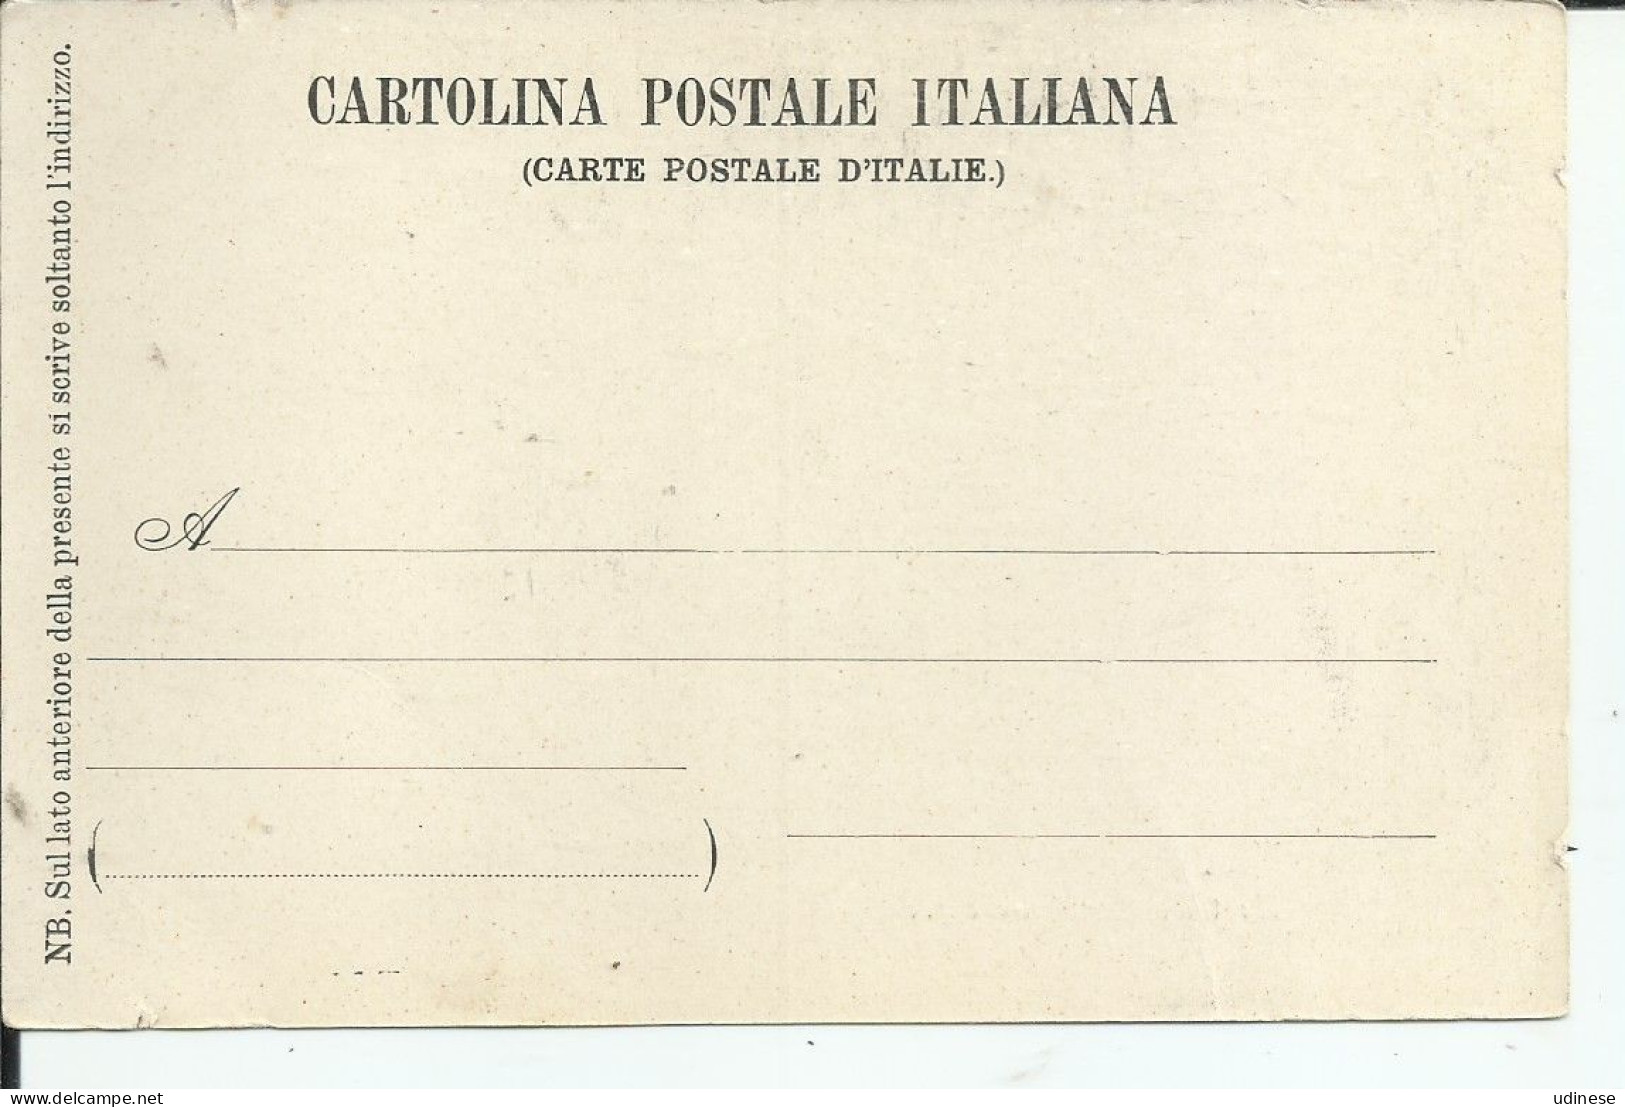 CARTOLINA POSTALE ITALIANA 1900 Ca. - BEATRICE CENCI IN CARCERE, DIPINTO DI ACHILLE LEONARDI - Gefängnis & Insassen